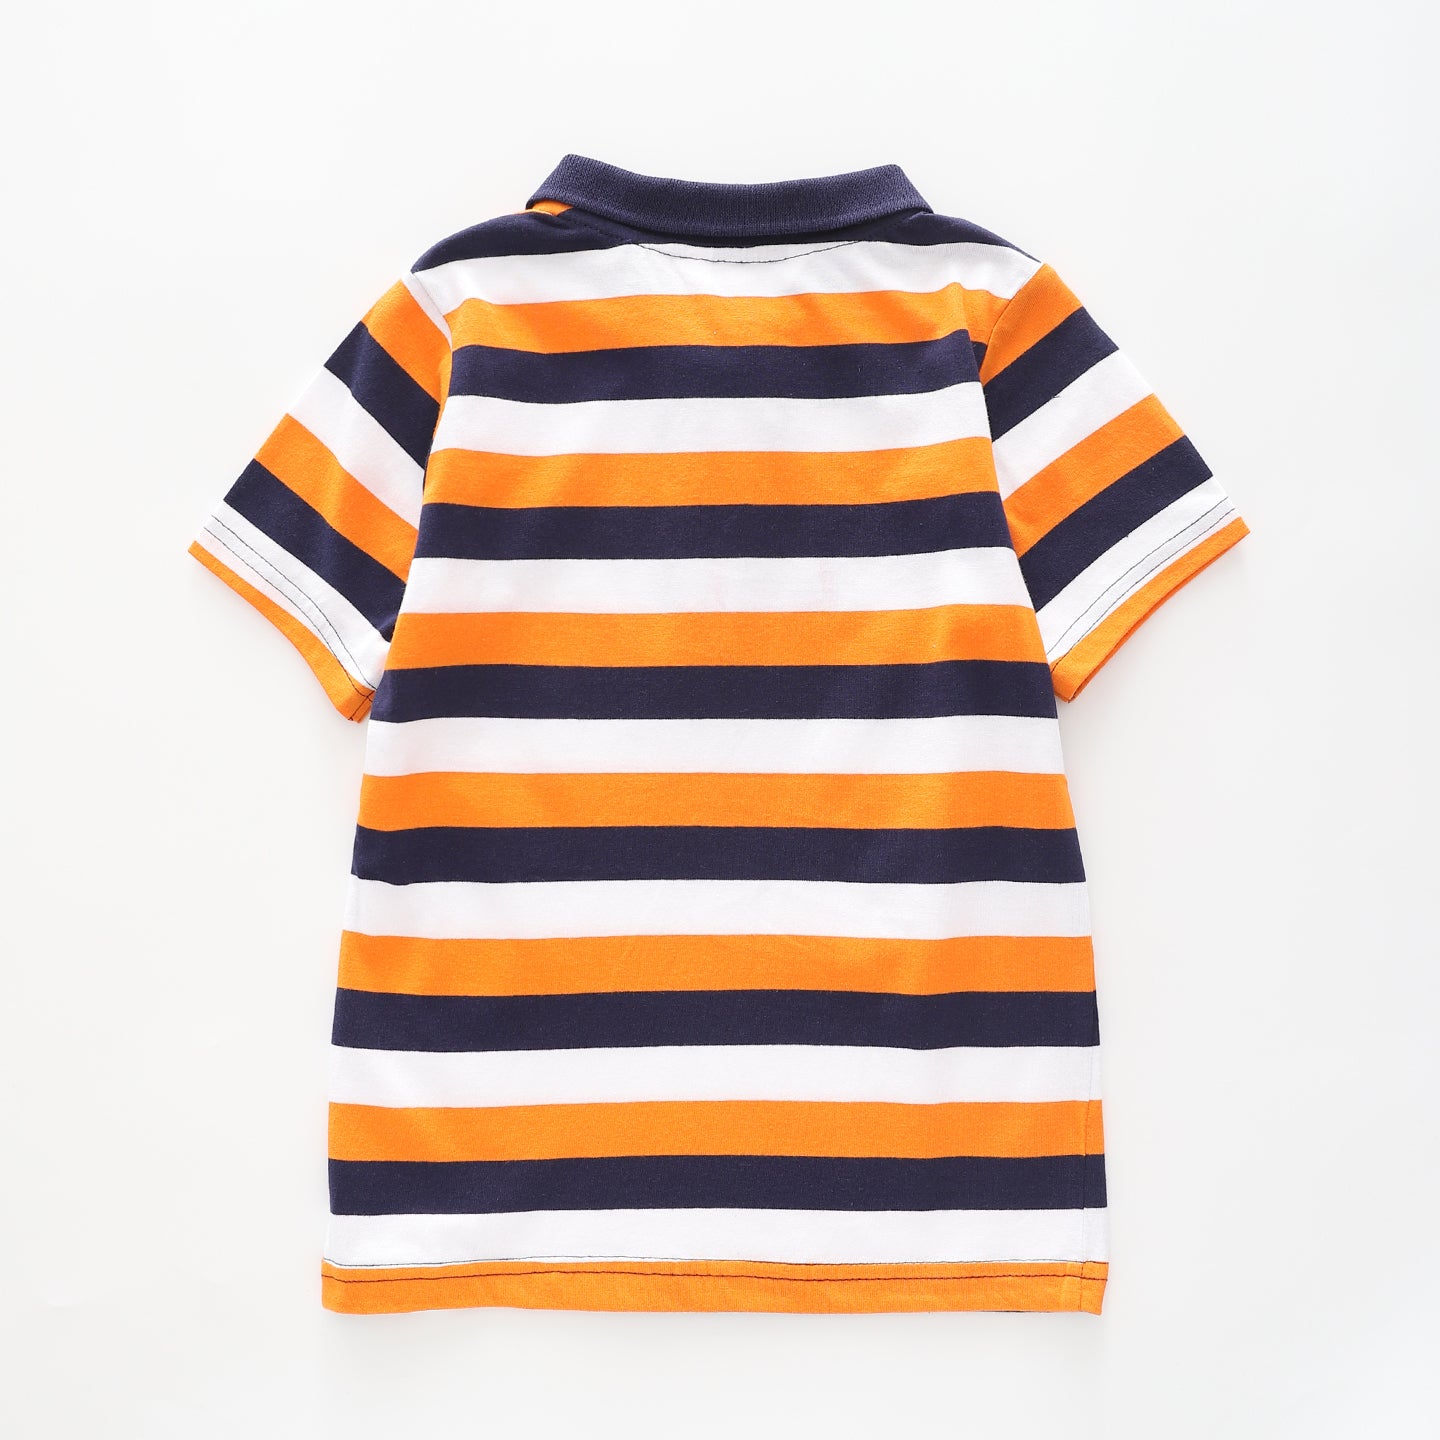 Boy's Navy and Orange Striped Blue Polo Shirt